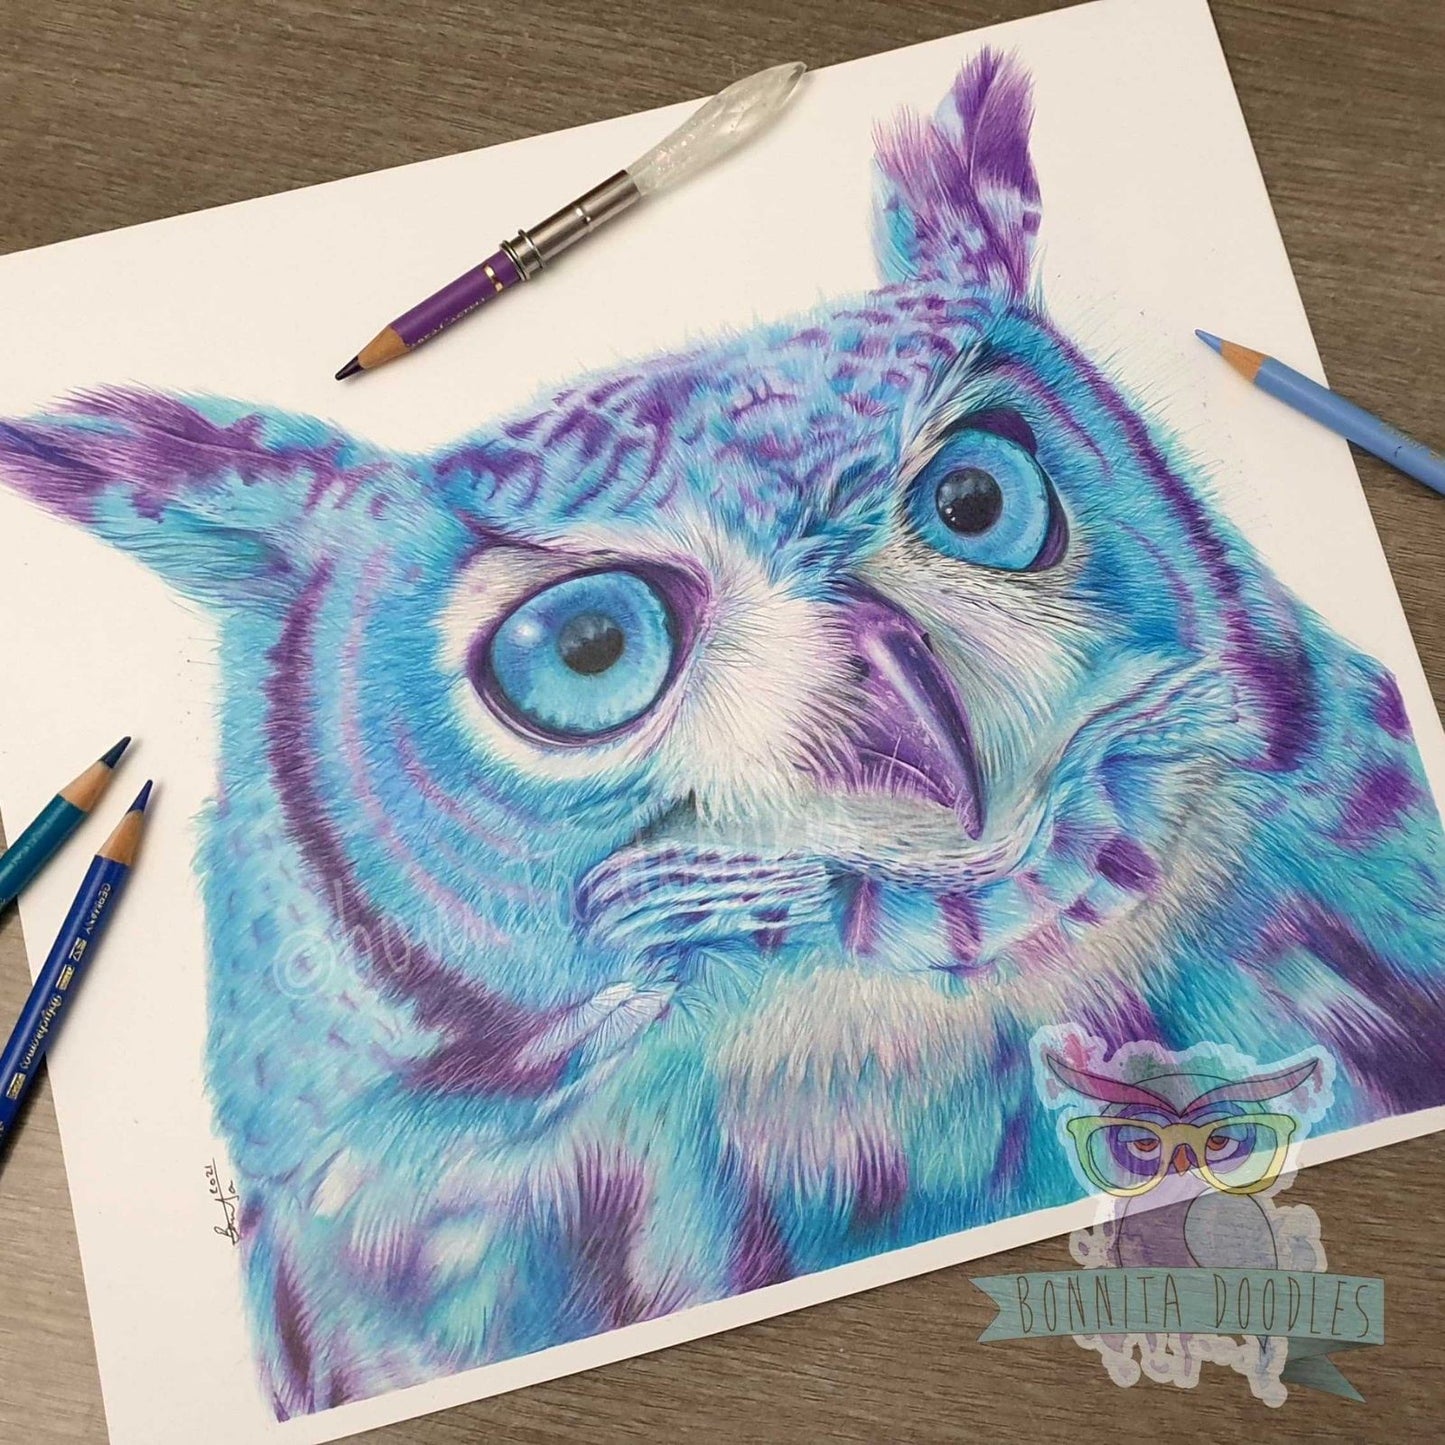 Screech owl print - Sapphire Series. Home art print